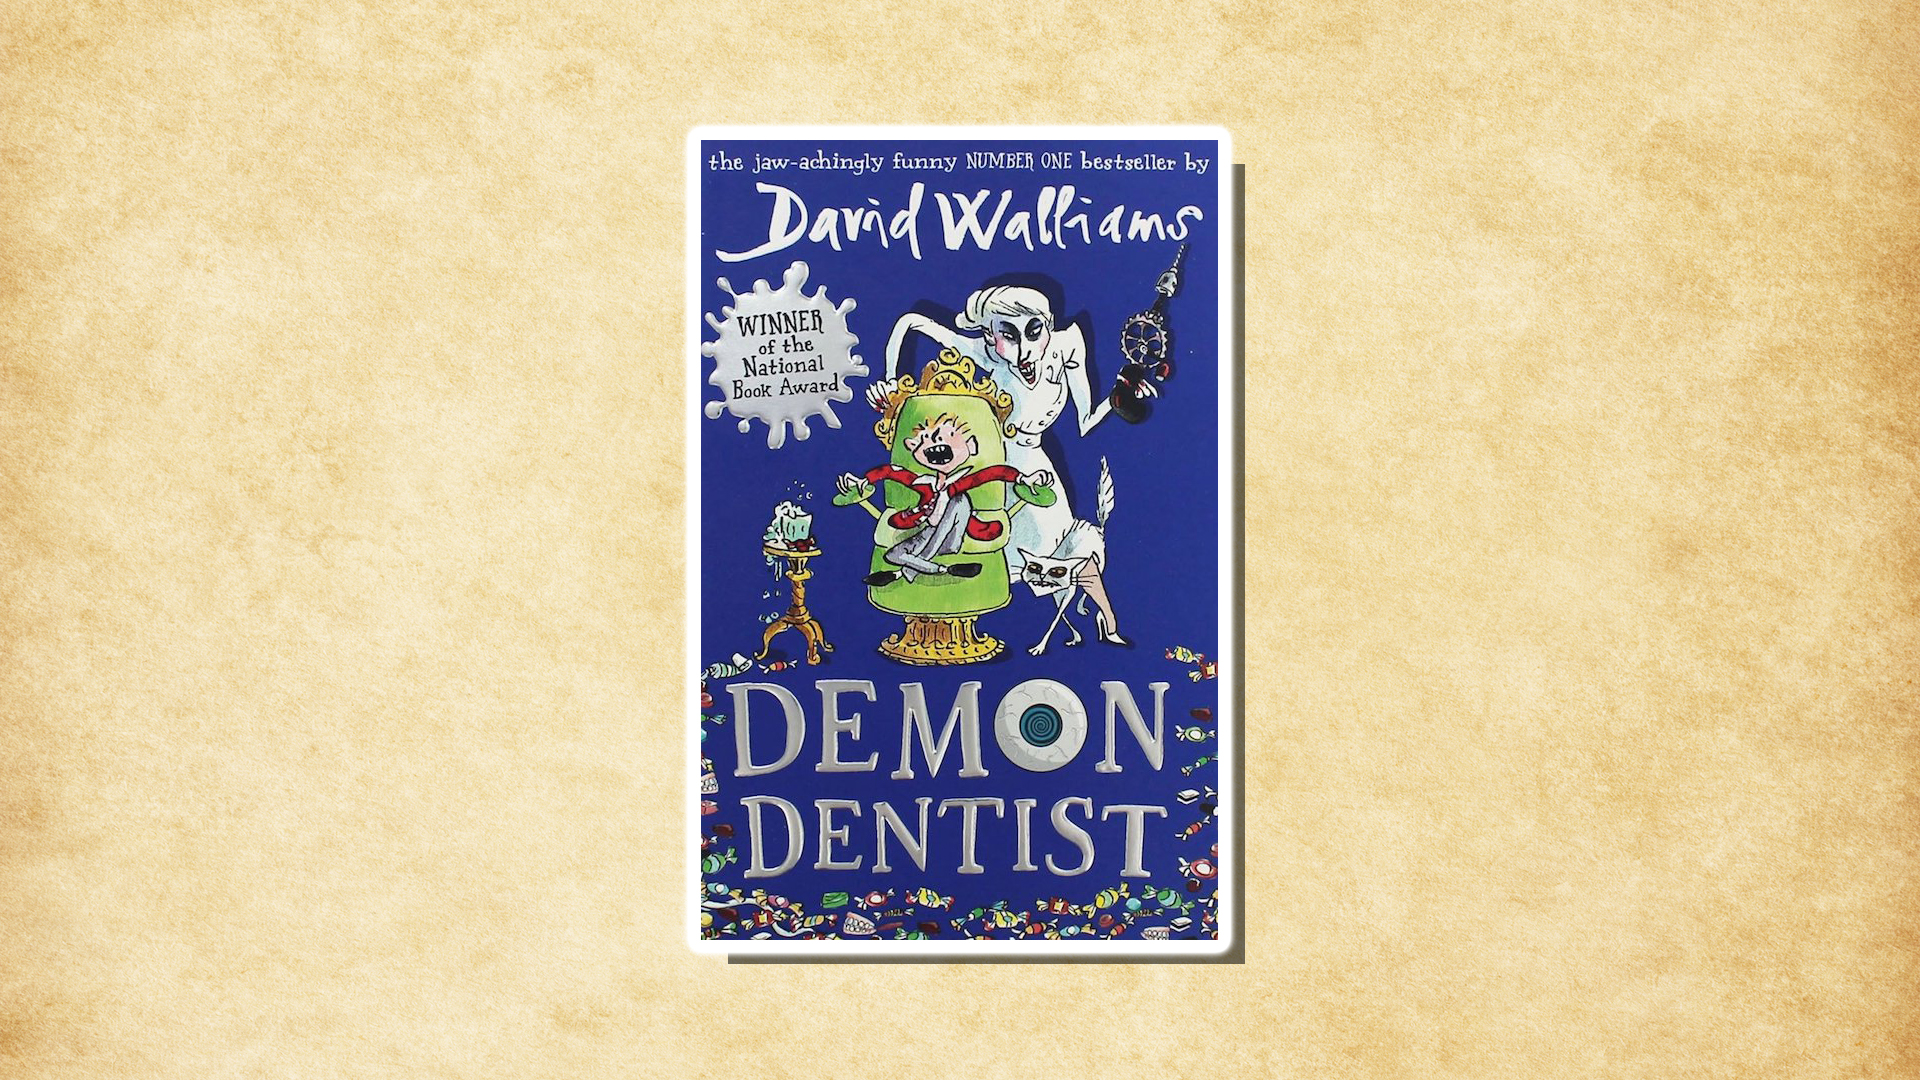 The Demon Dentist